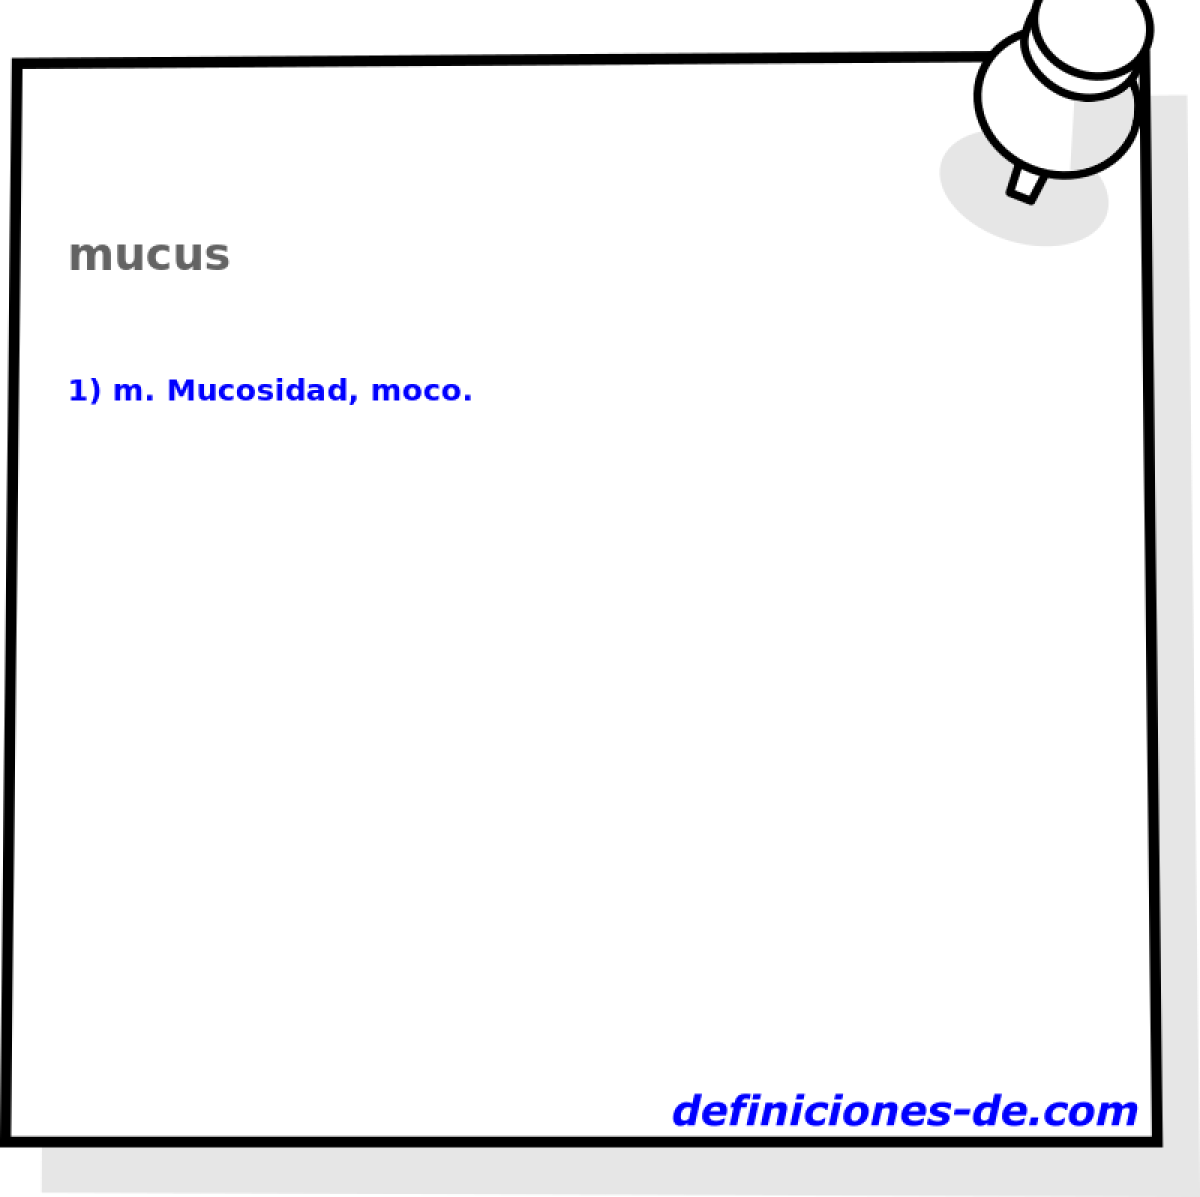 mucus 